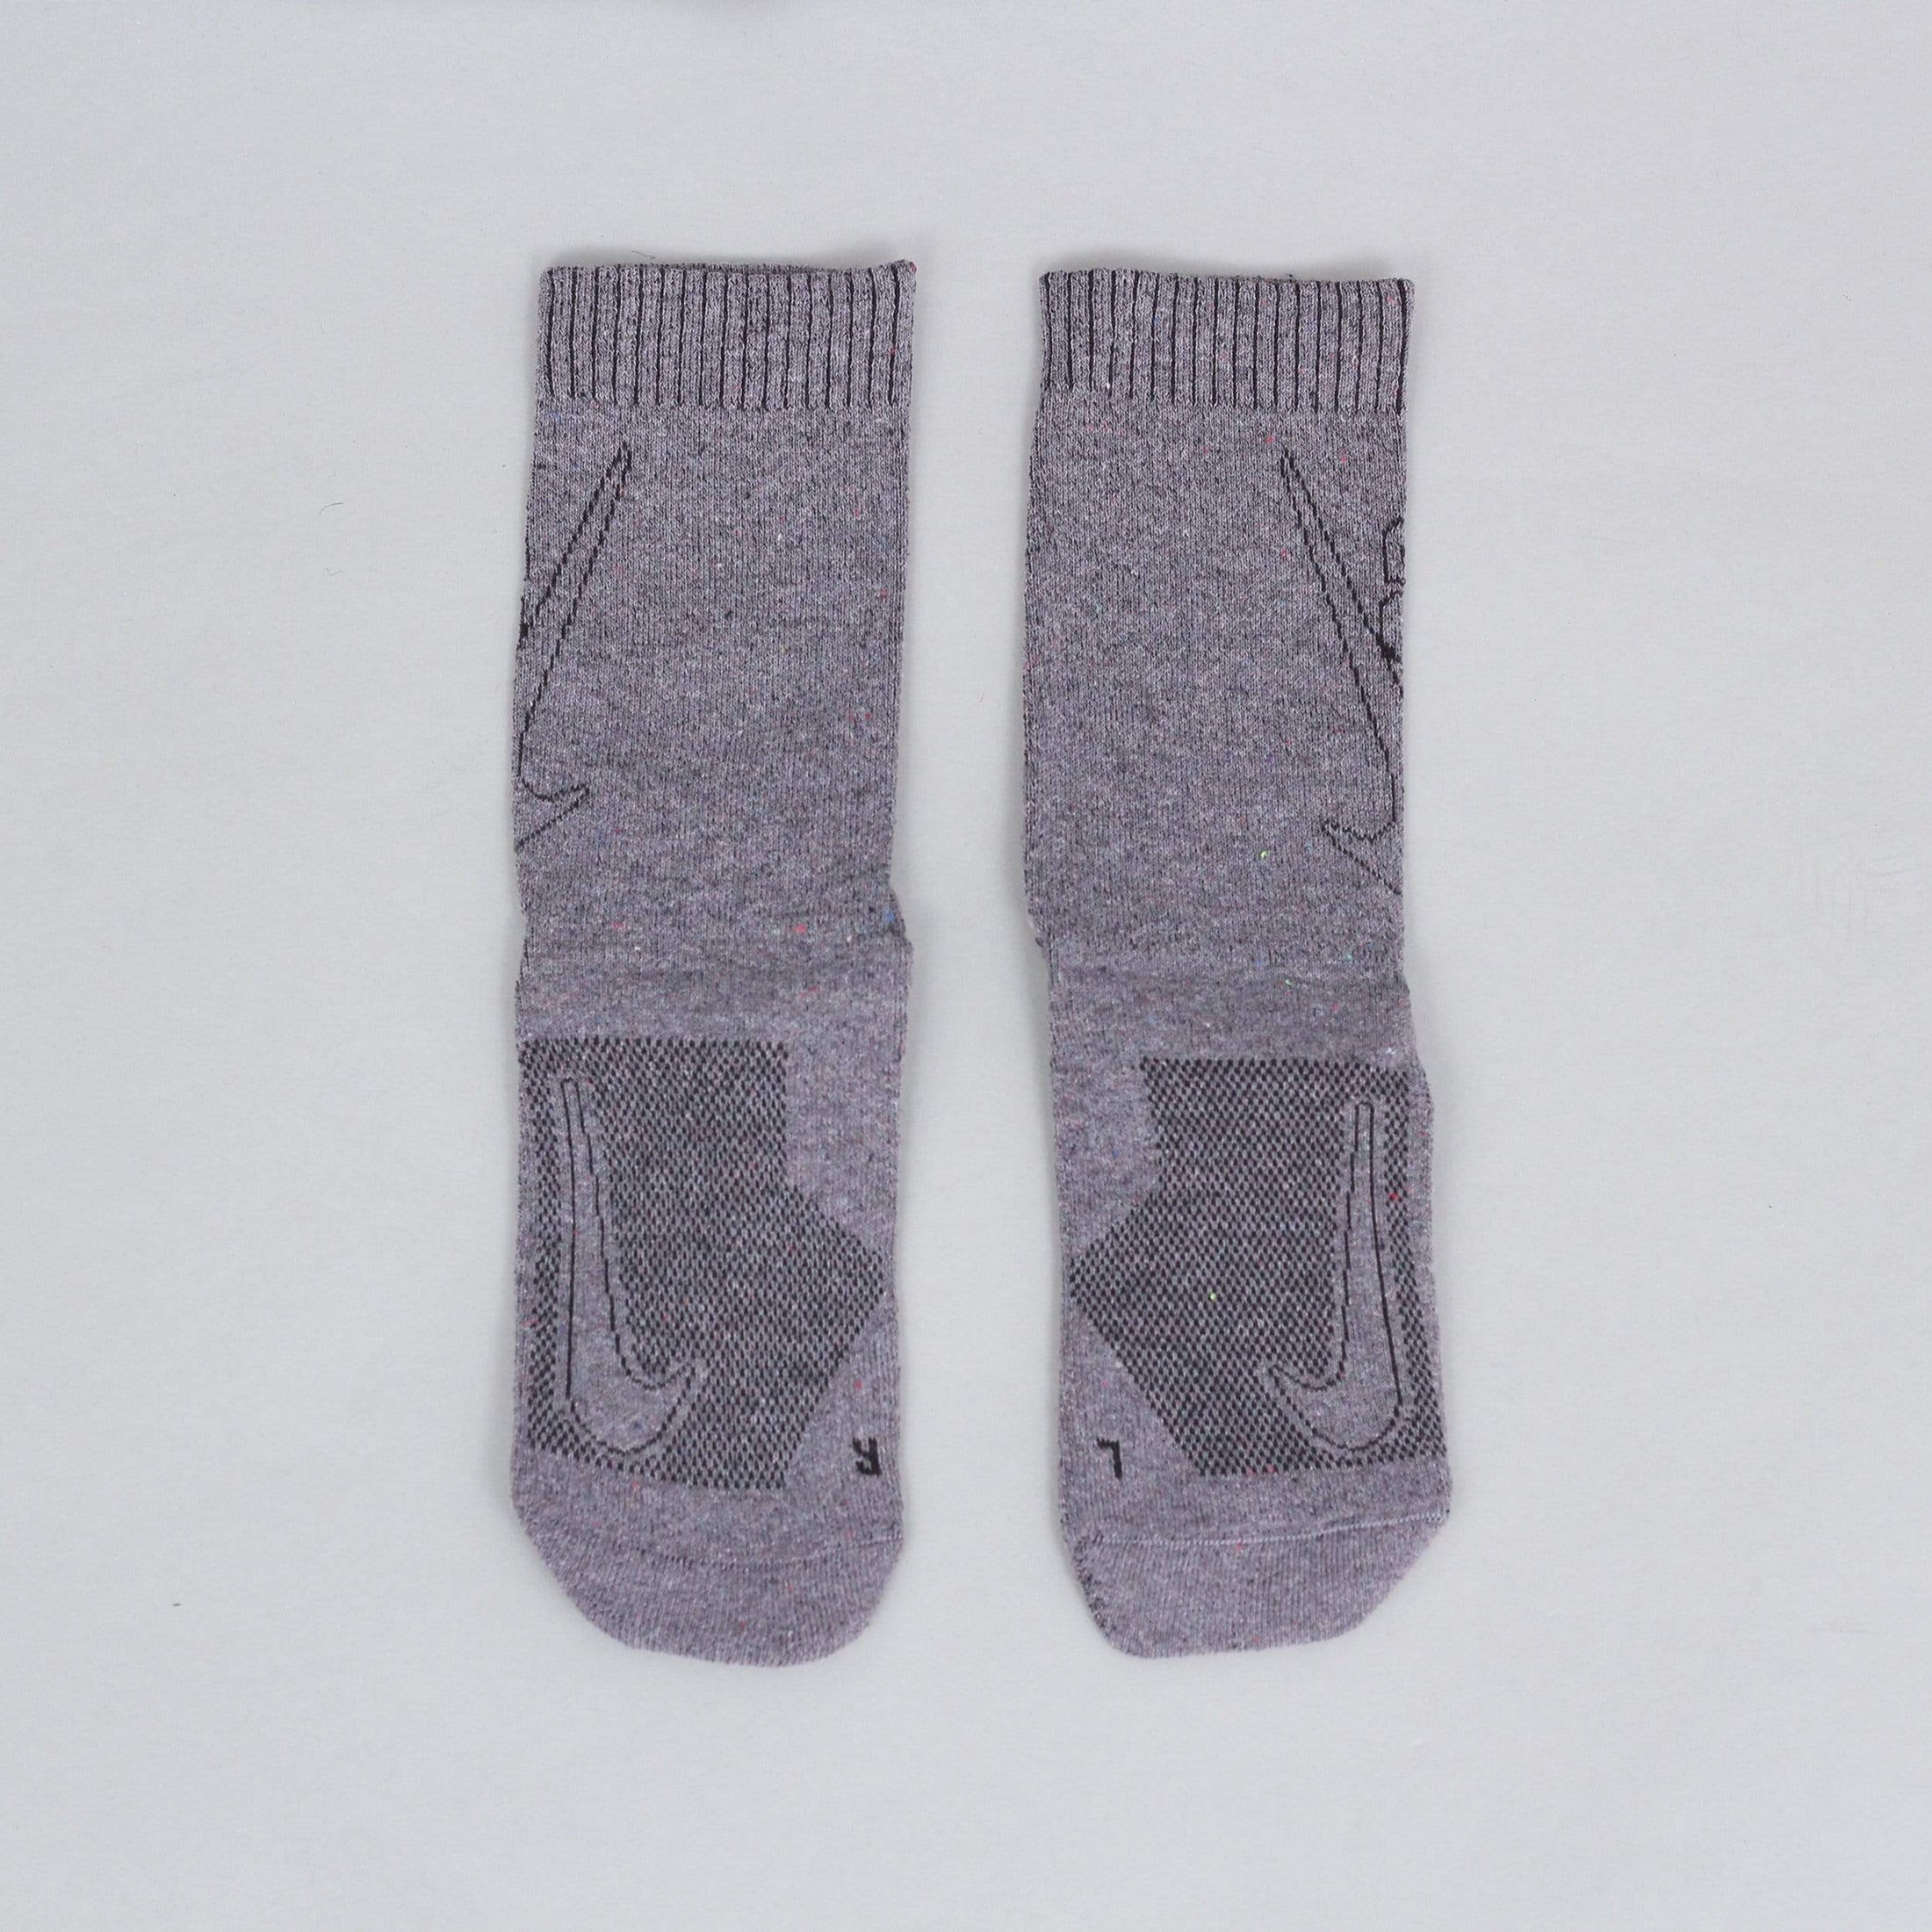 Nike SB Multiplier Socks Grey / Black